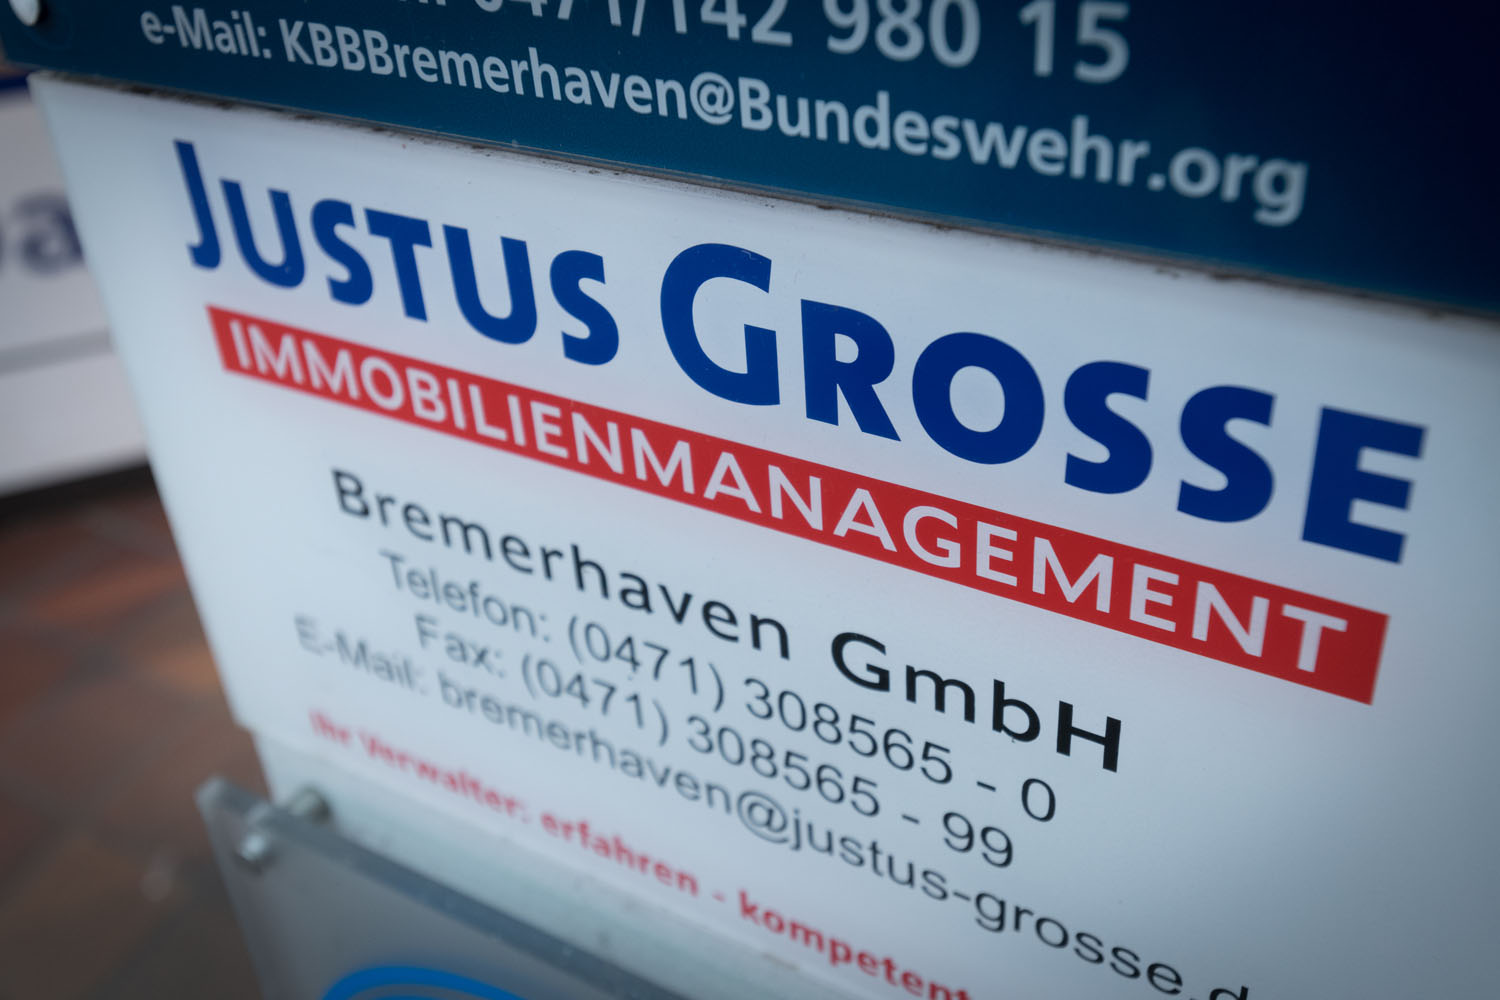 Justus Grosse Bremerhaven GmbH